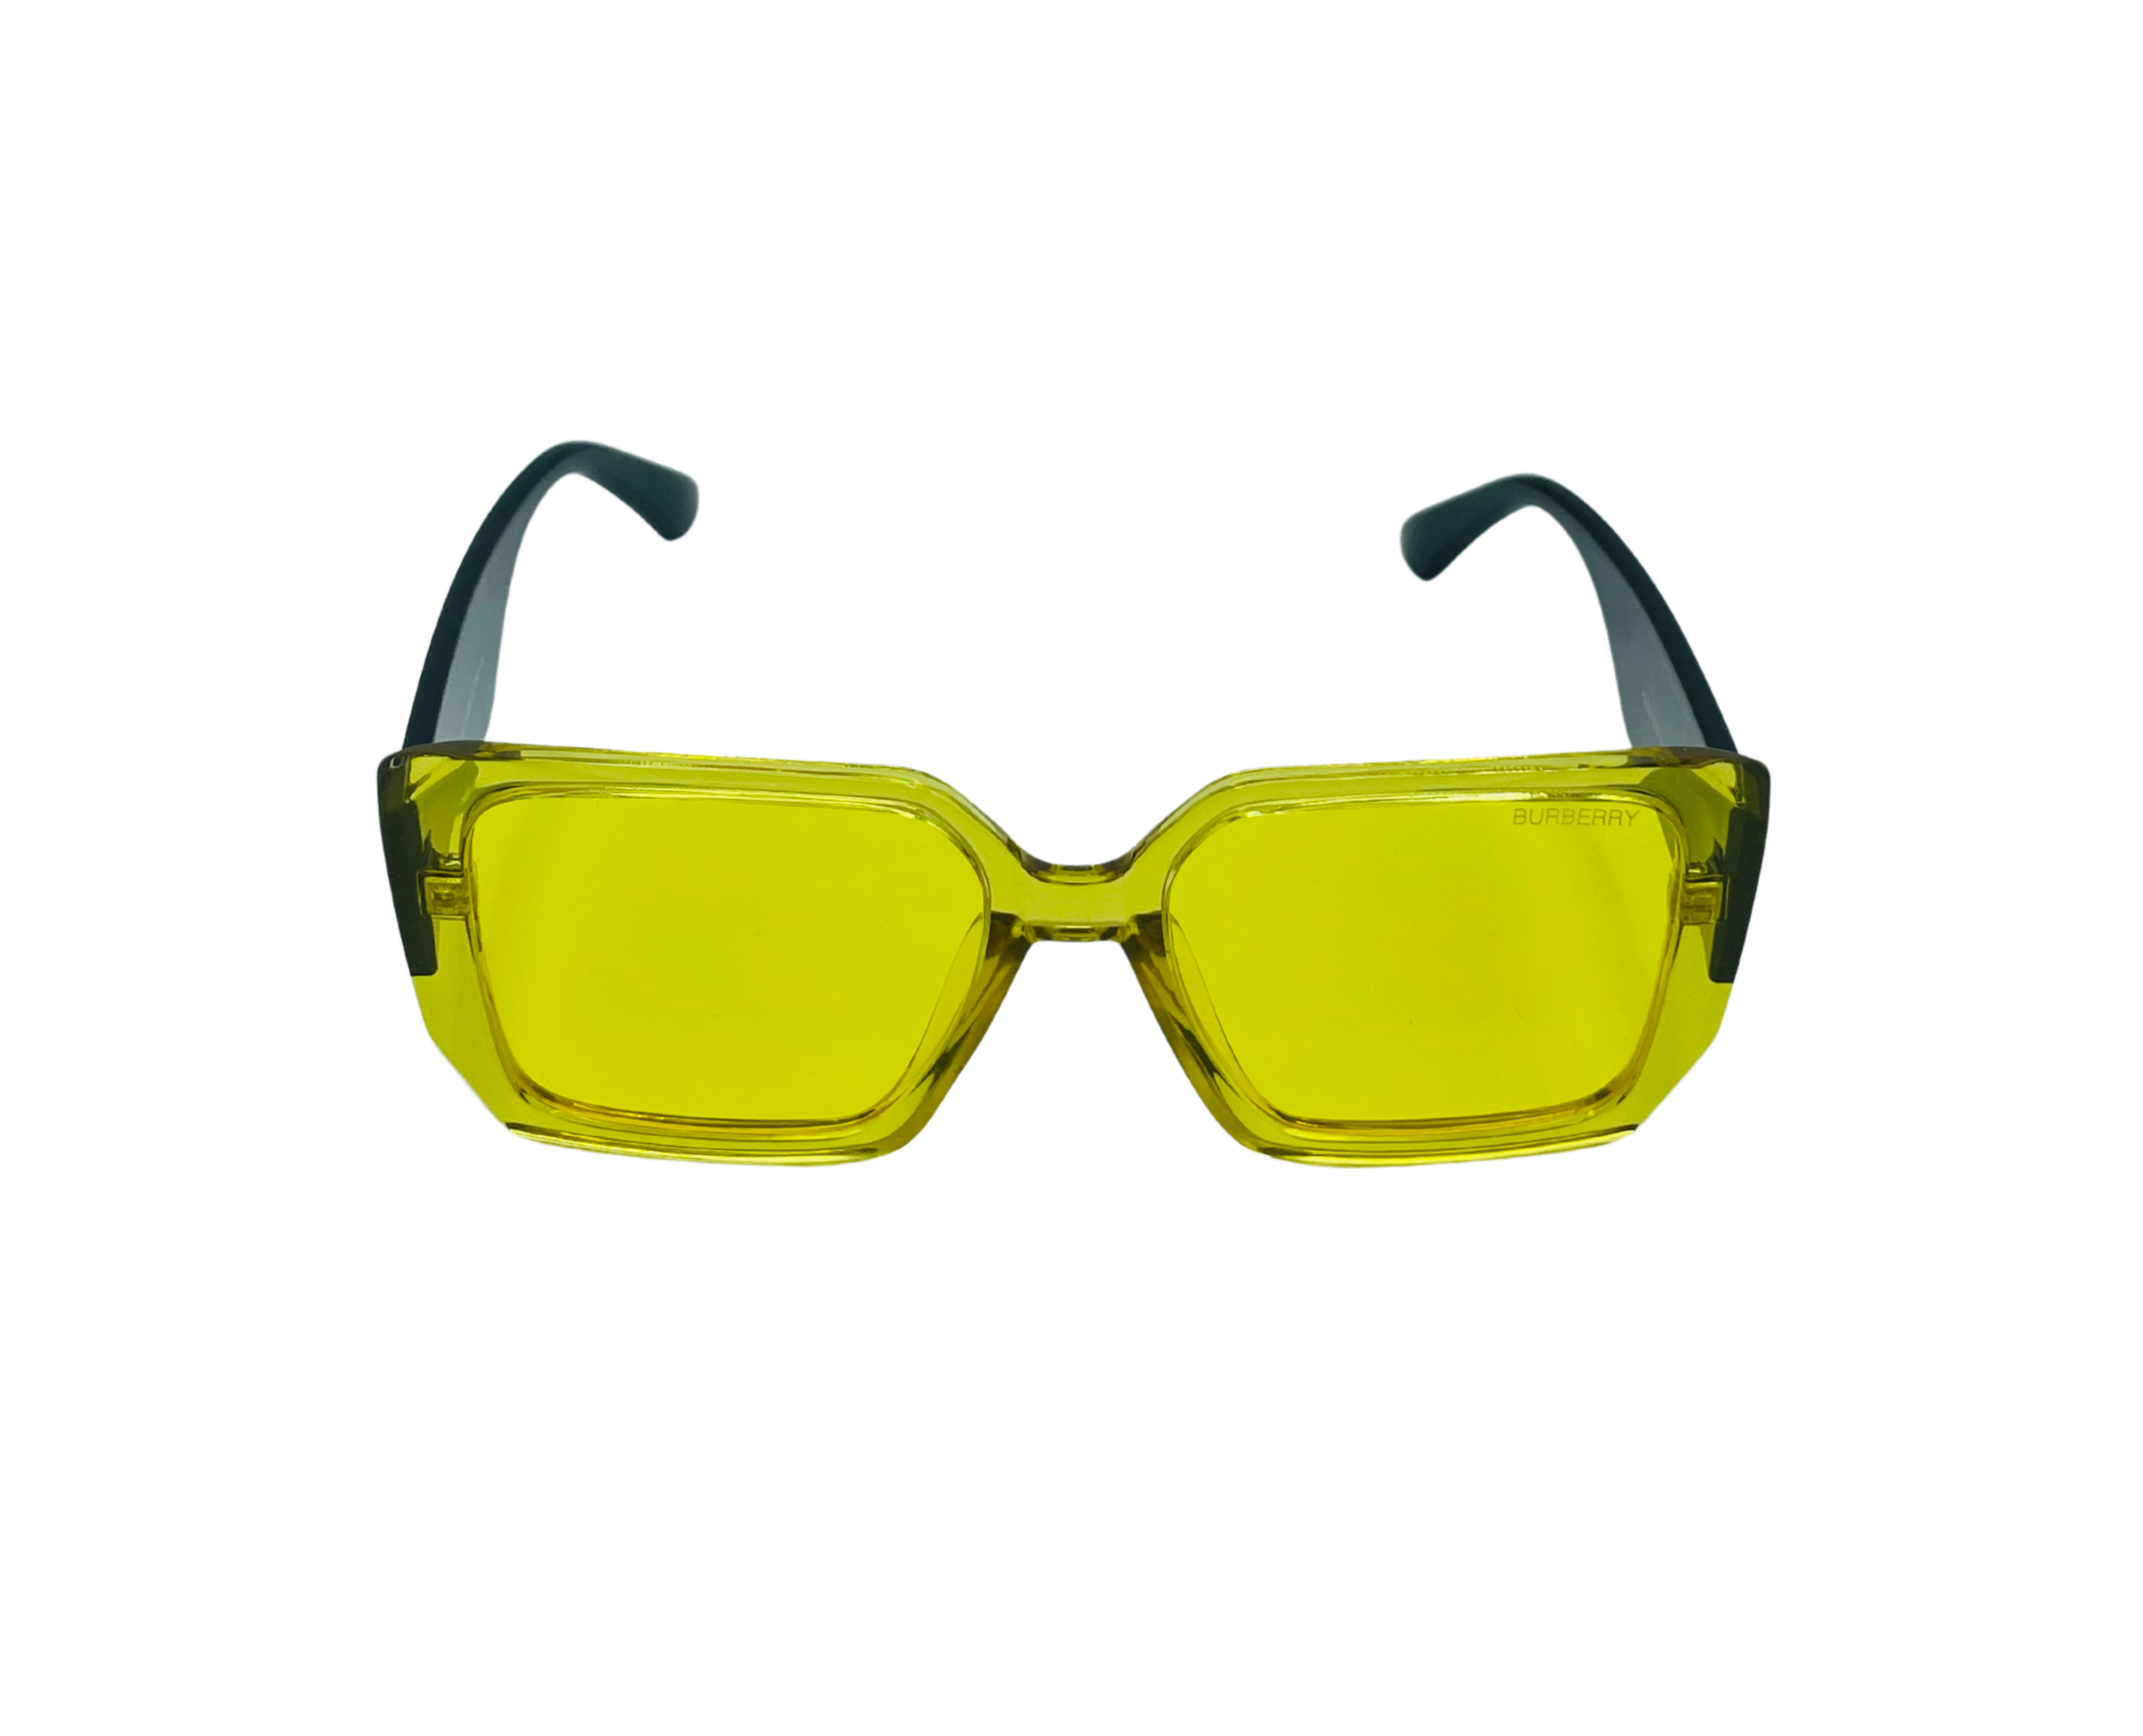 NS Classic - 22339 - Yellow - Polarized Sunglasses